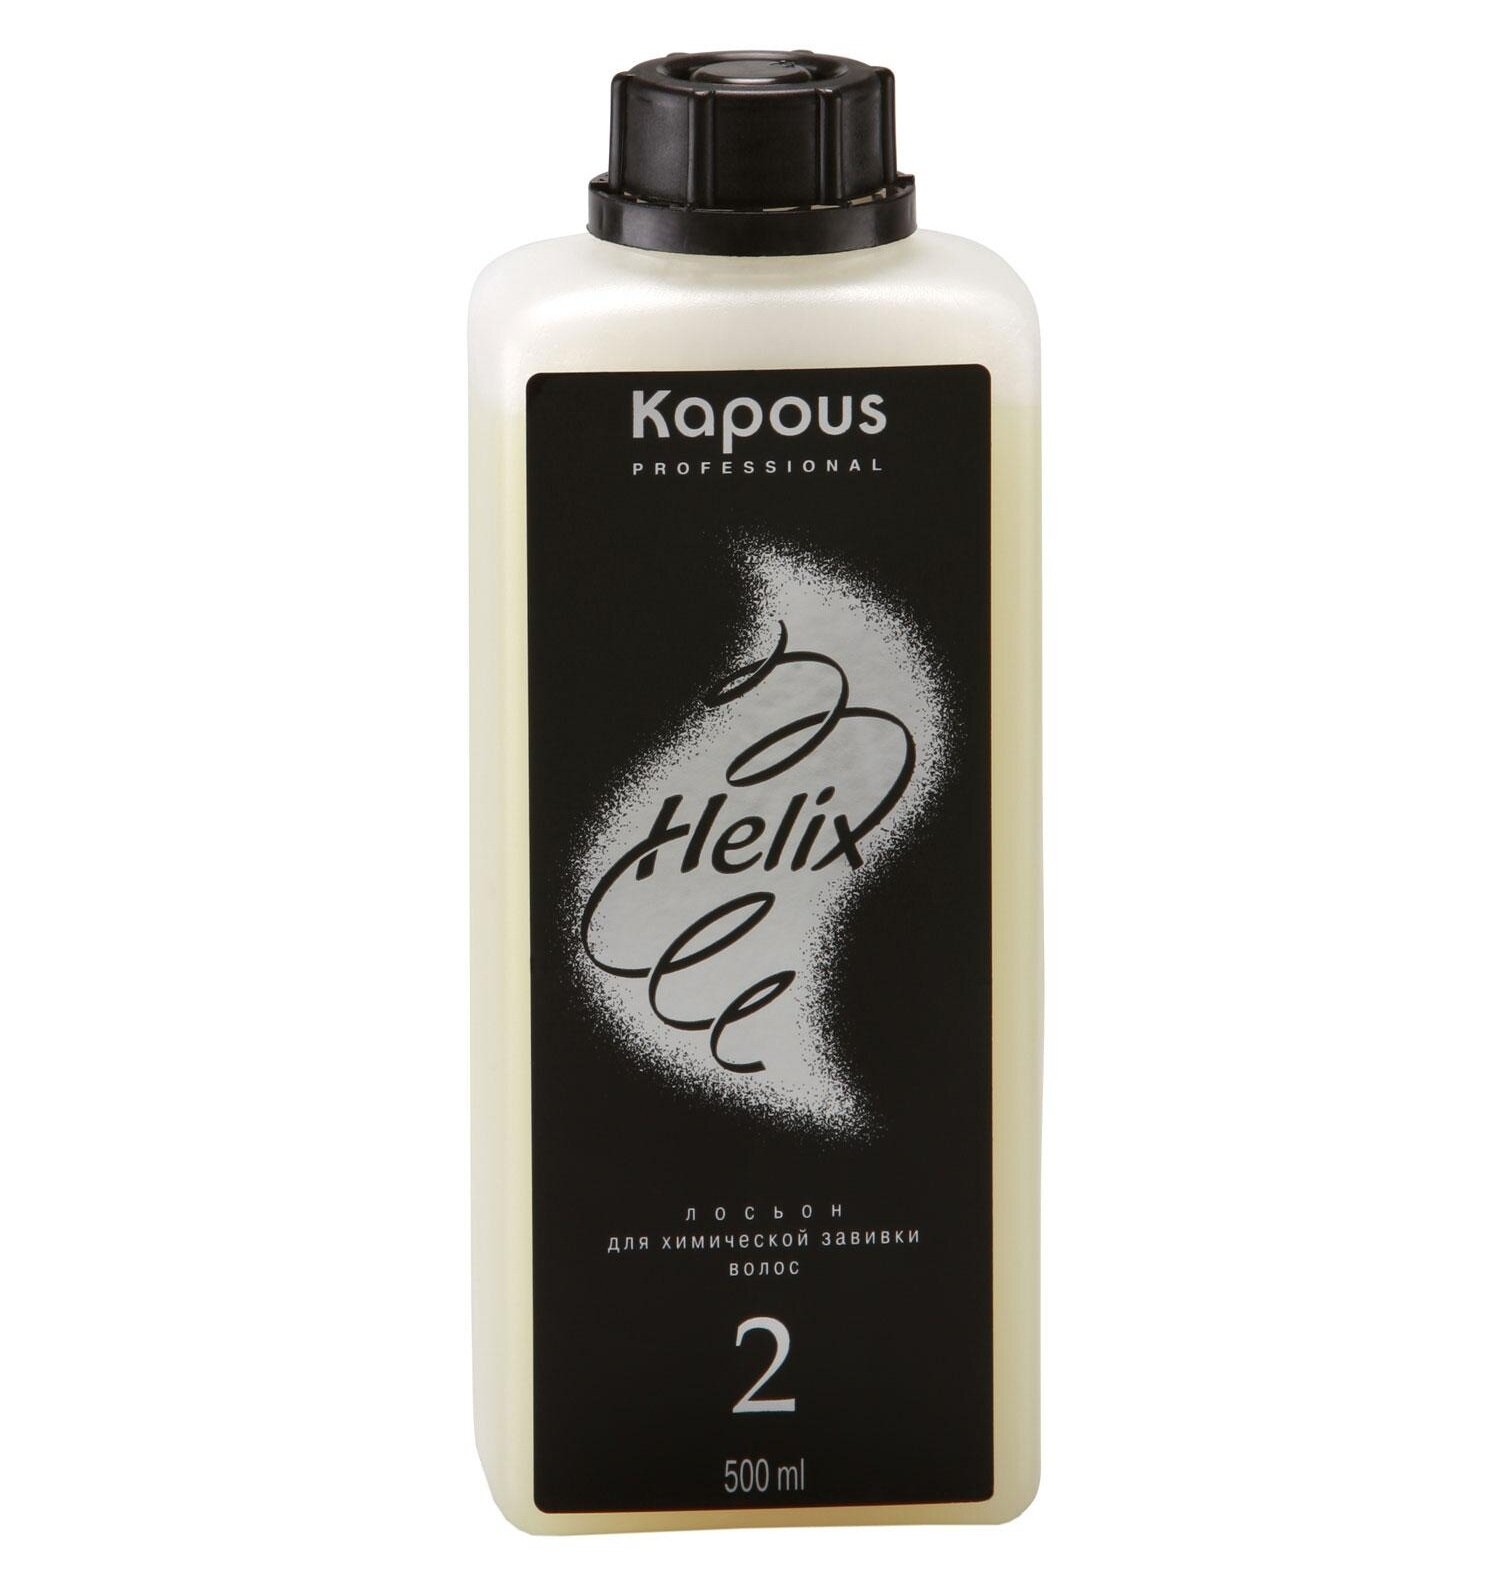 Kapous Studio Professional Helix Perm Лосьон для химической завивки волос, №2, 500 мл